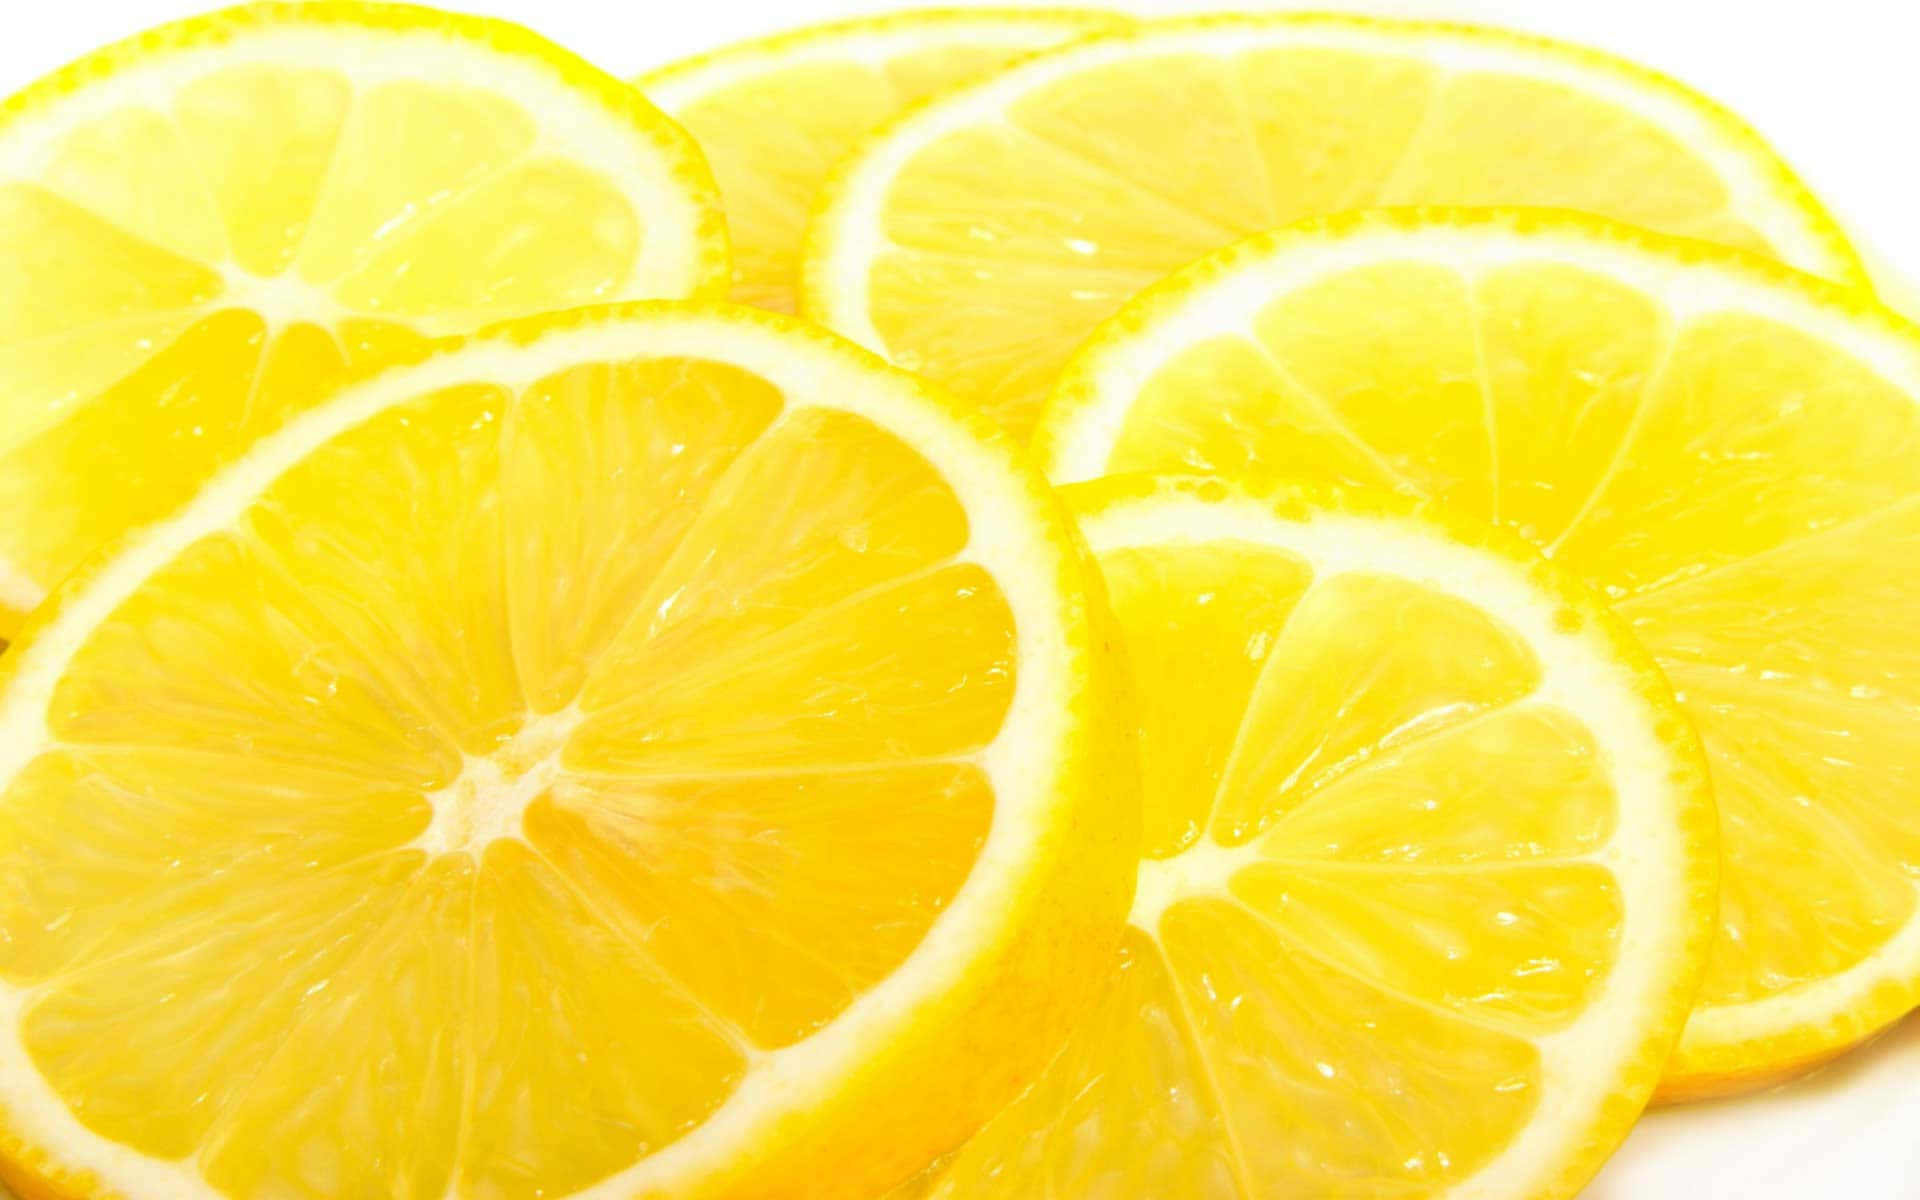 "A basket of fresh and juicy lemons",